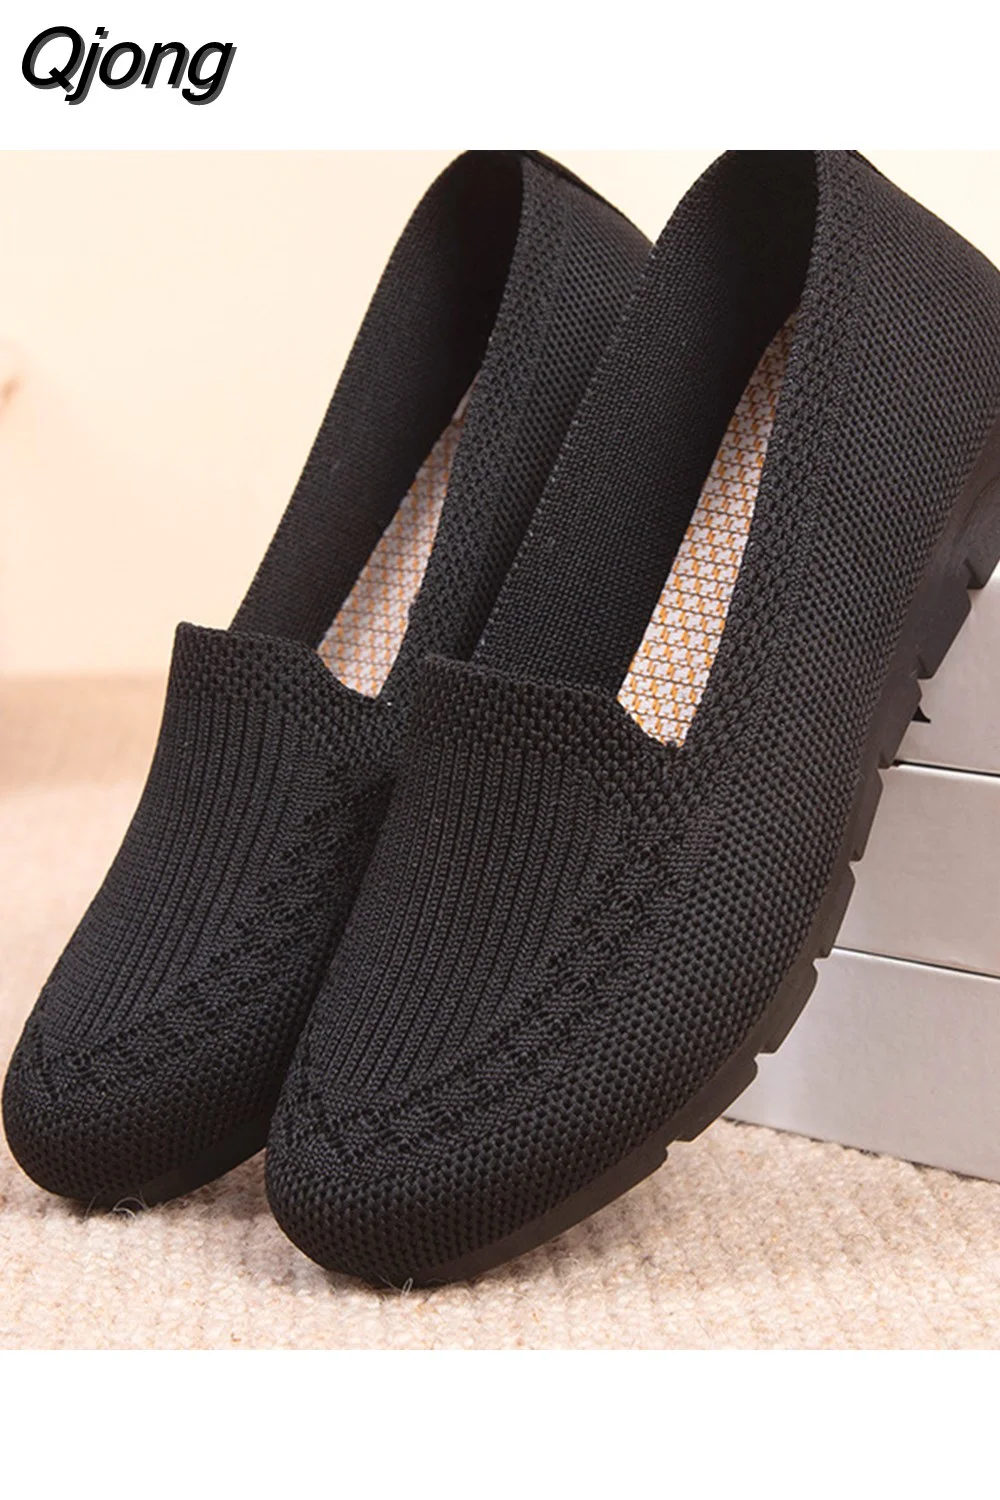 Qjong Shoes Women's Summer Mesh Breathable Flat Shoes Ladies Comfort Light Sneaker Socks Women Slip on Loafers Zapatillas Muje